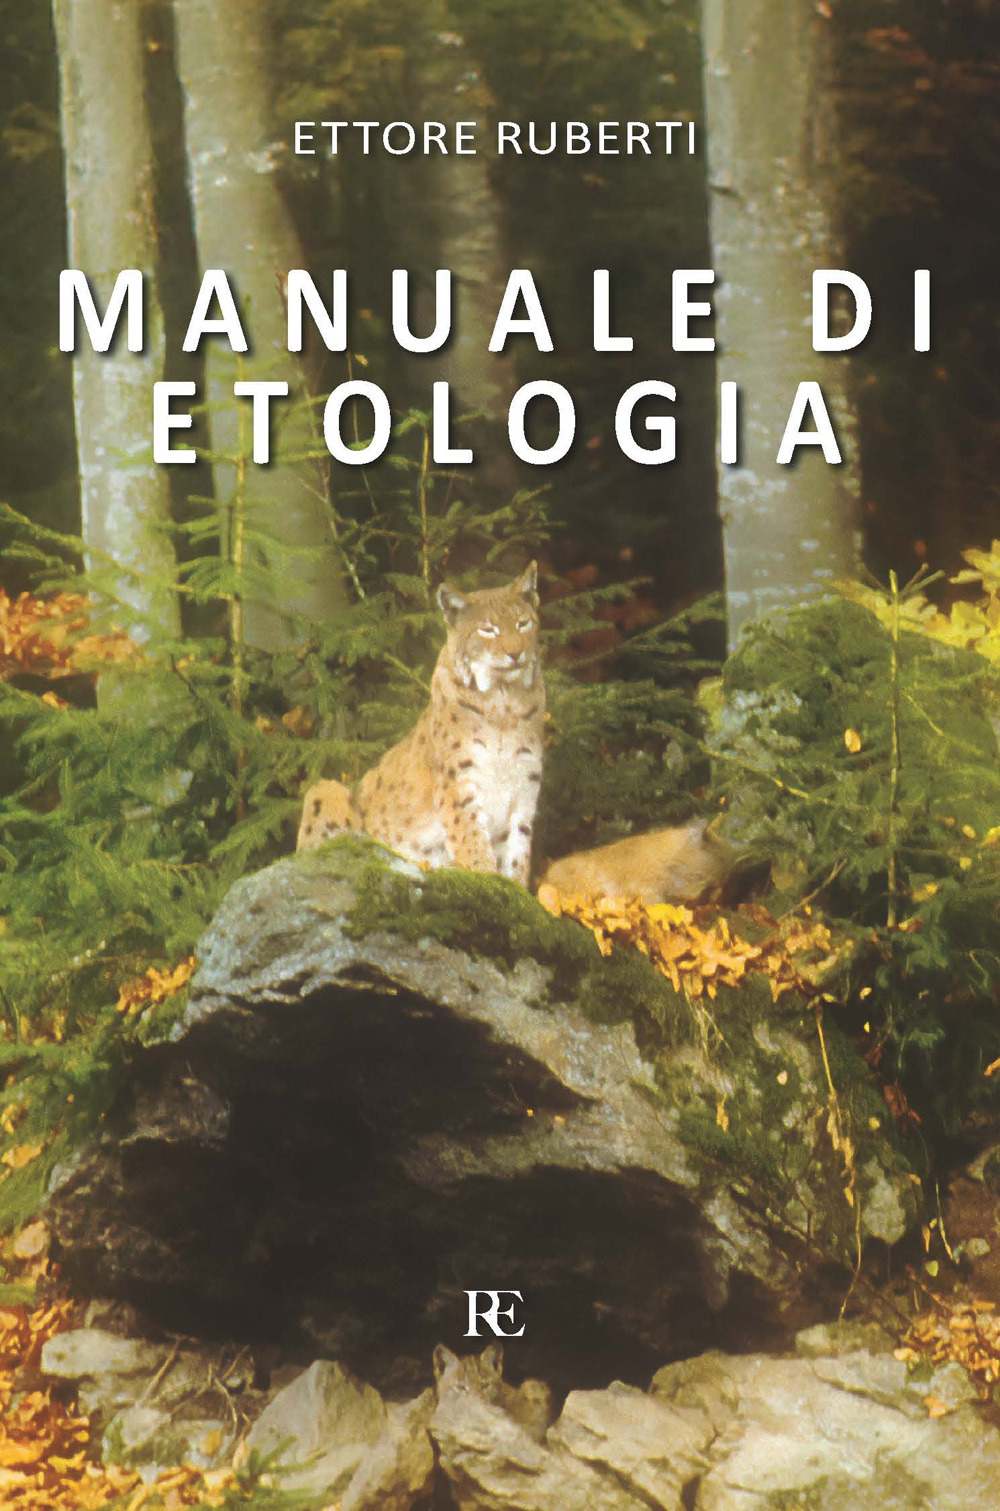 Manuale di etologia